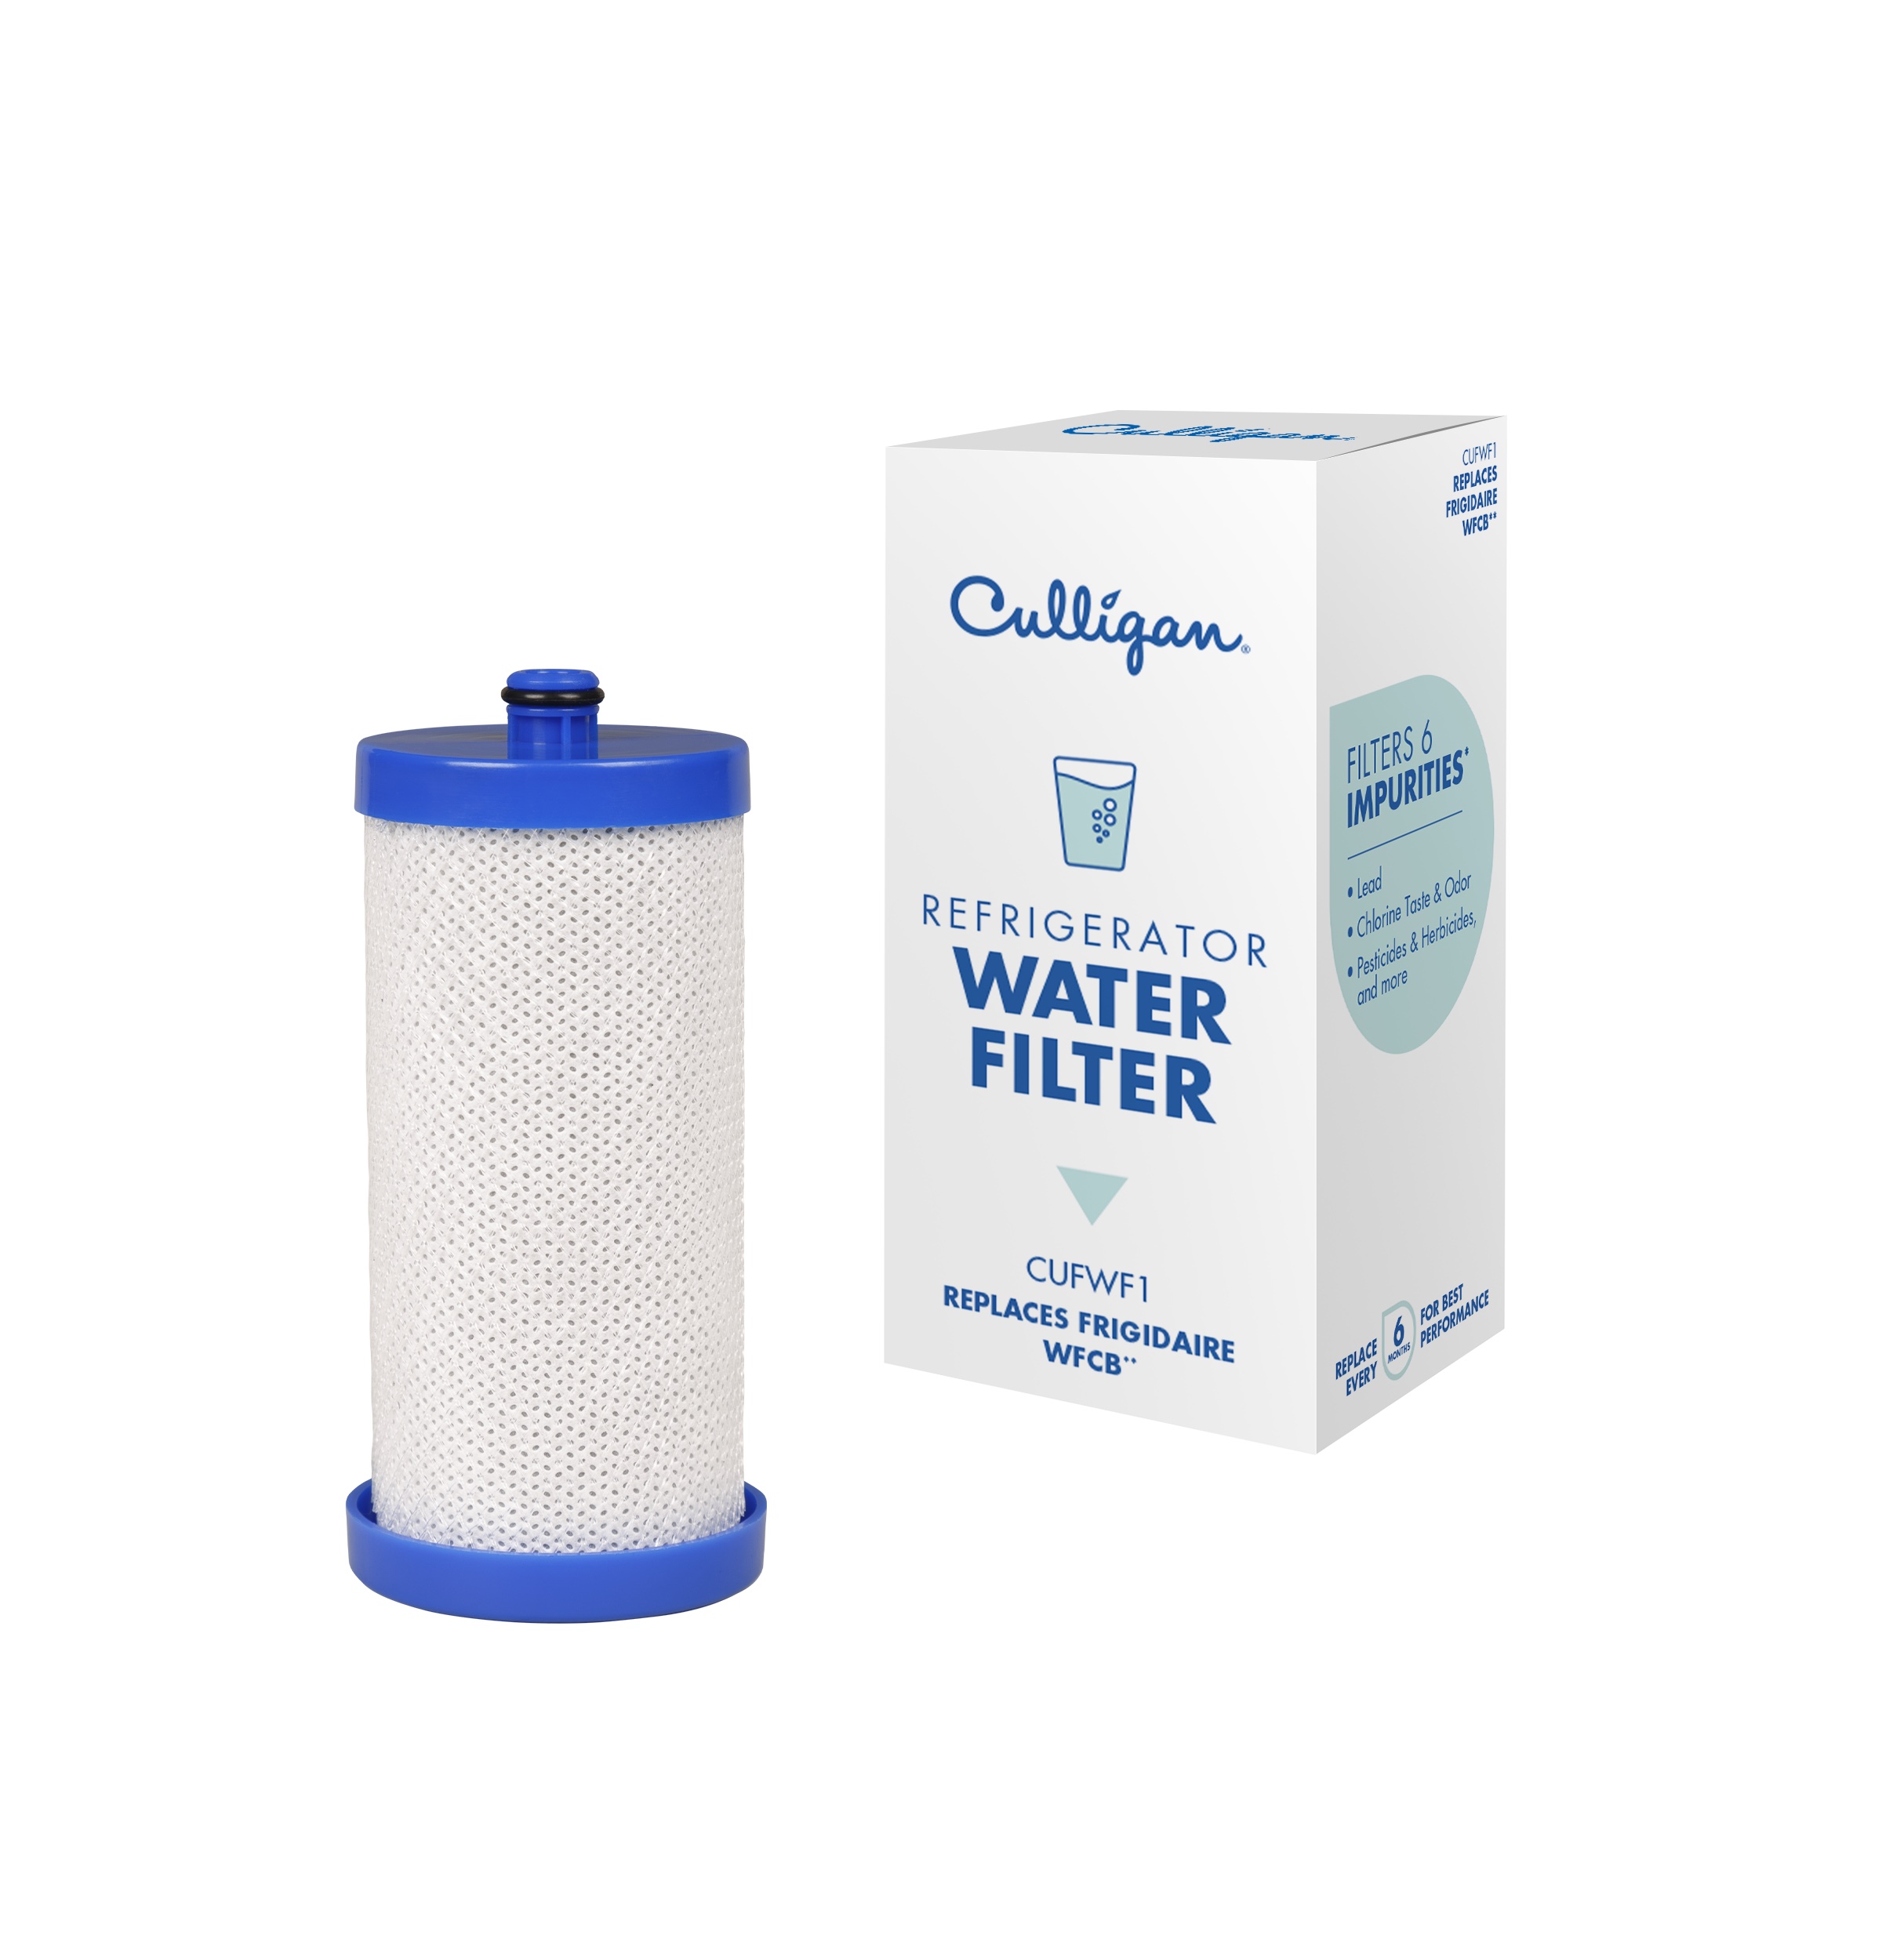 Culligan CUFWF1 Replaces Frigidaire (WFCB) Refrigerator Water Filter — Model #: CUFWF1